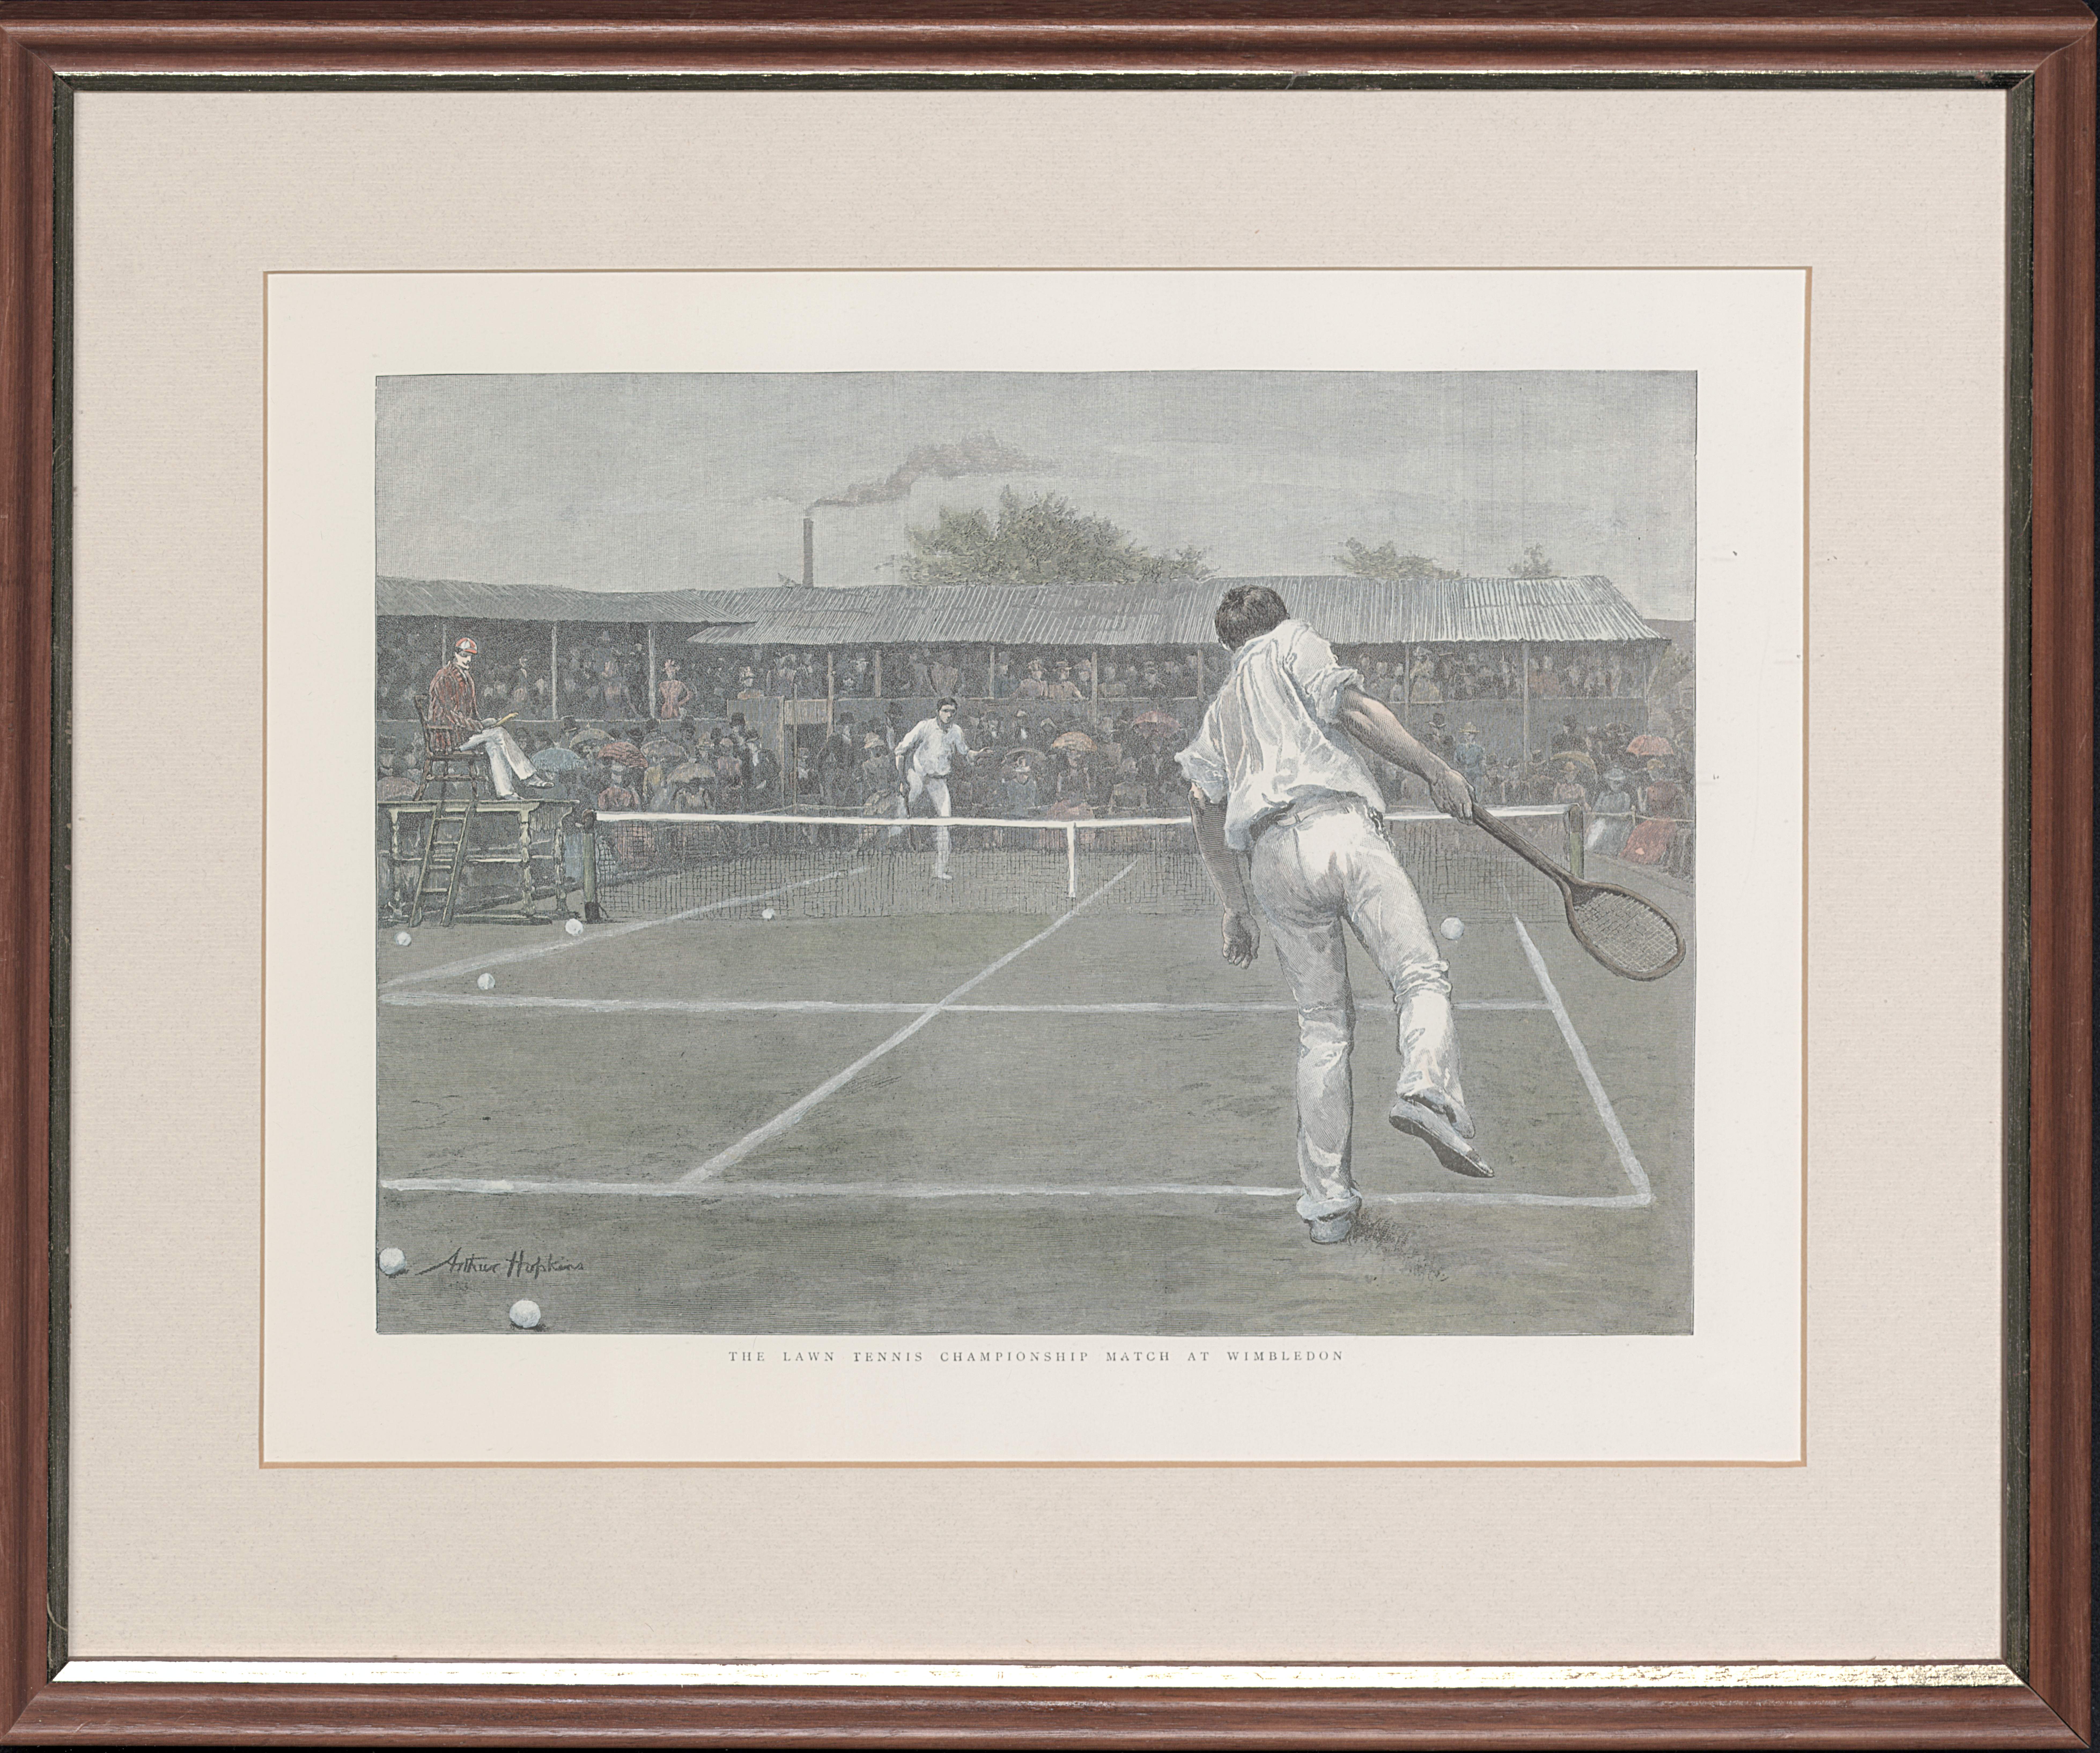 The Lawn Tennis Championship Match at Wimbledon, framed print, by Arthur Hopkins